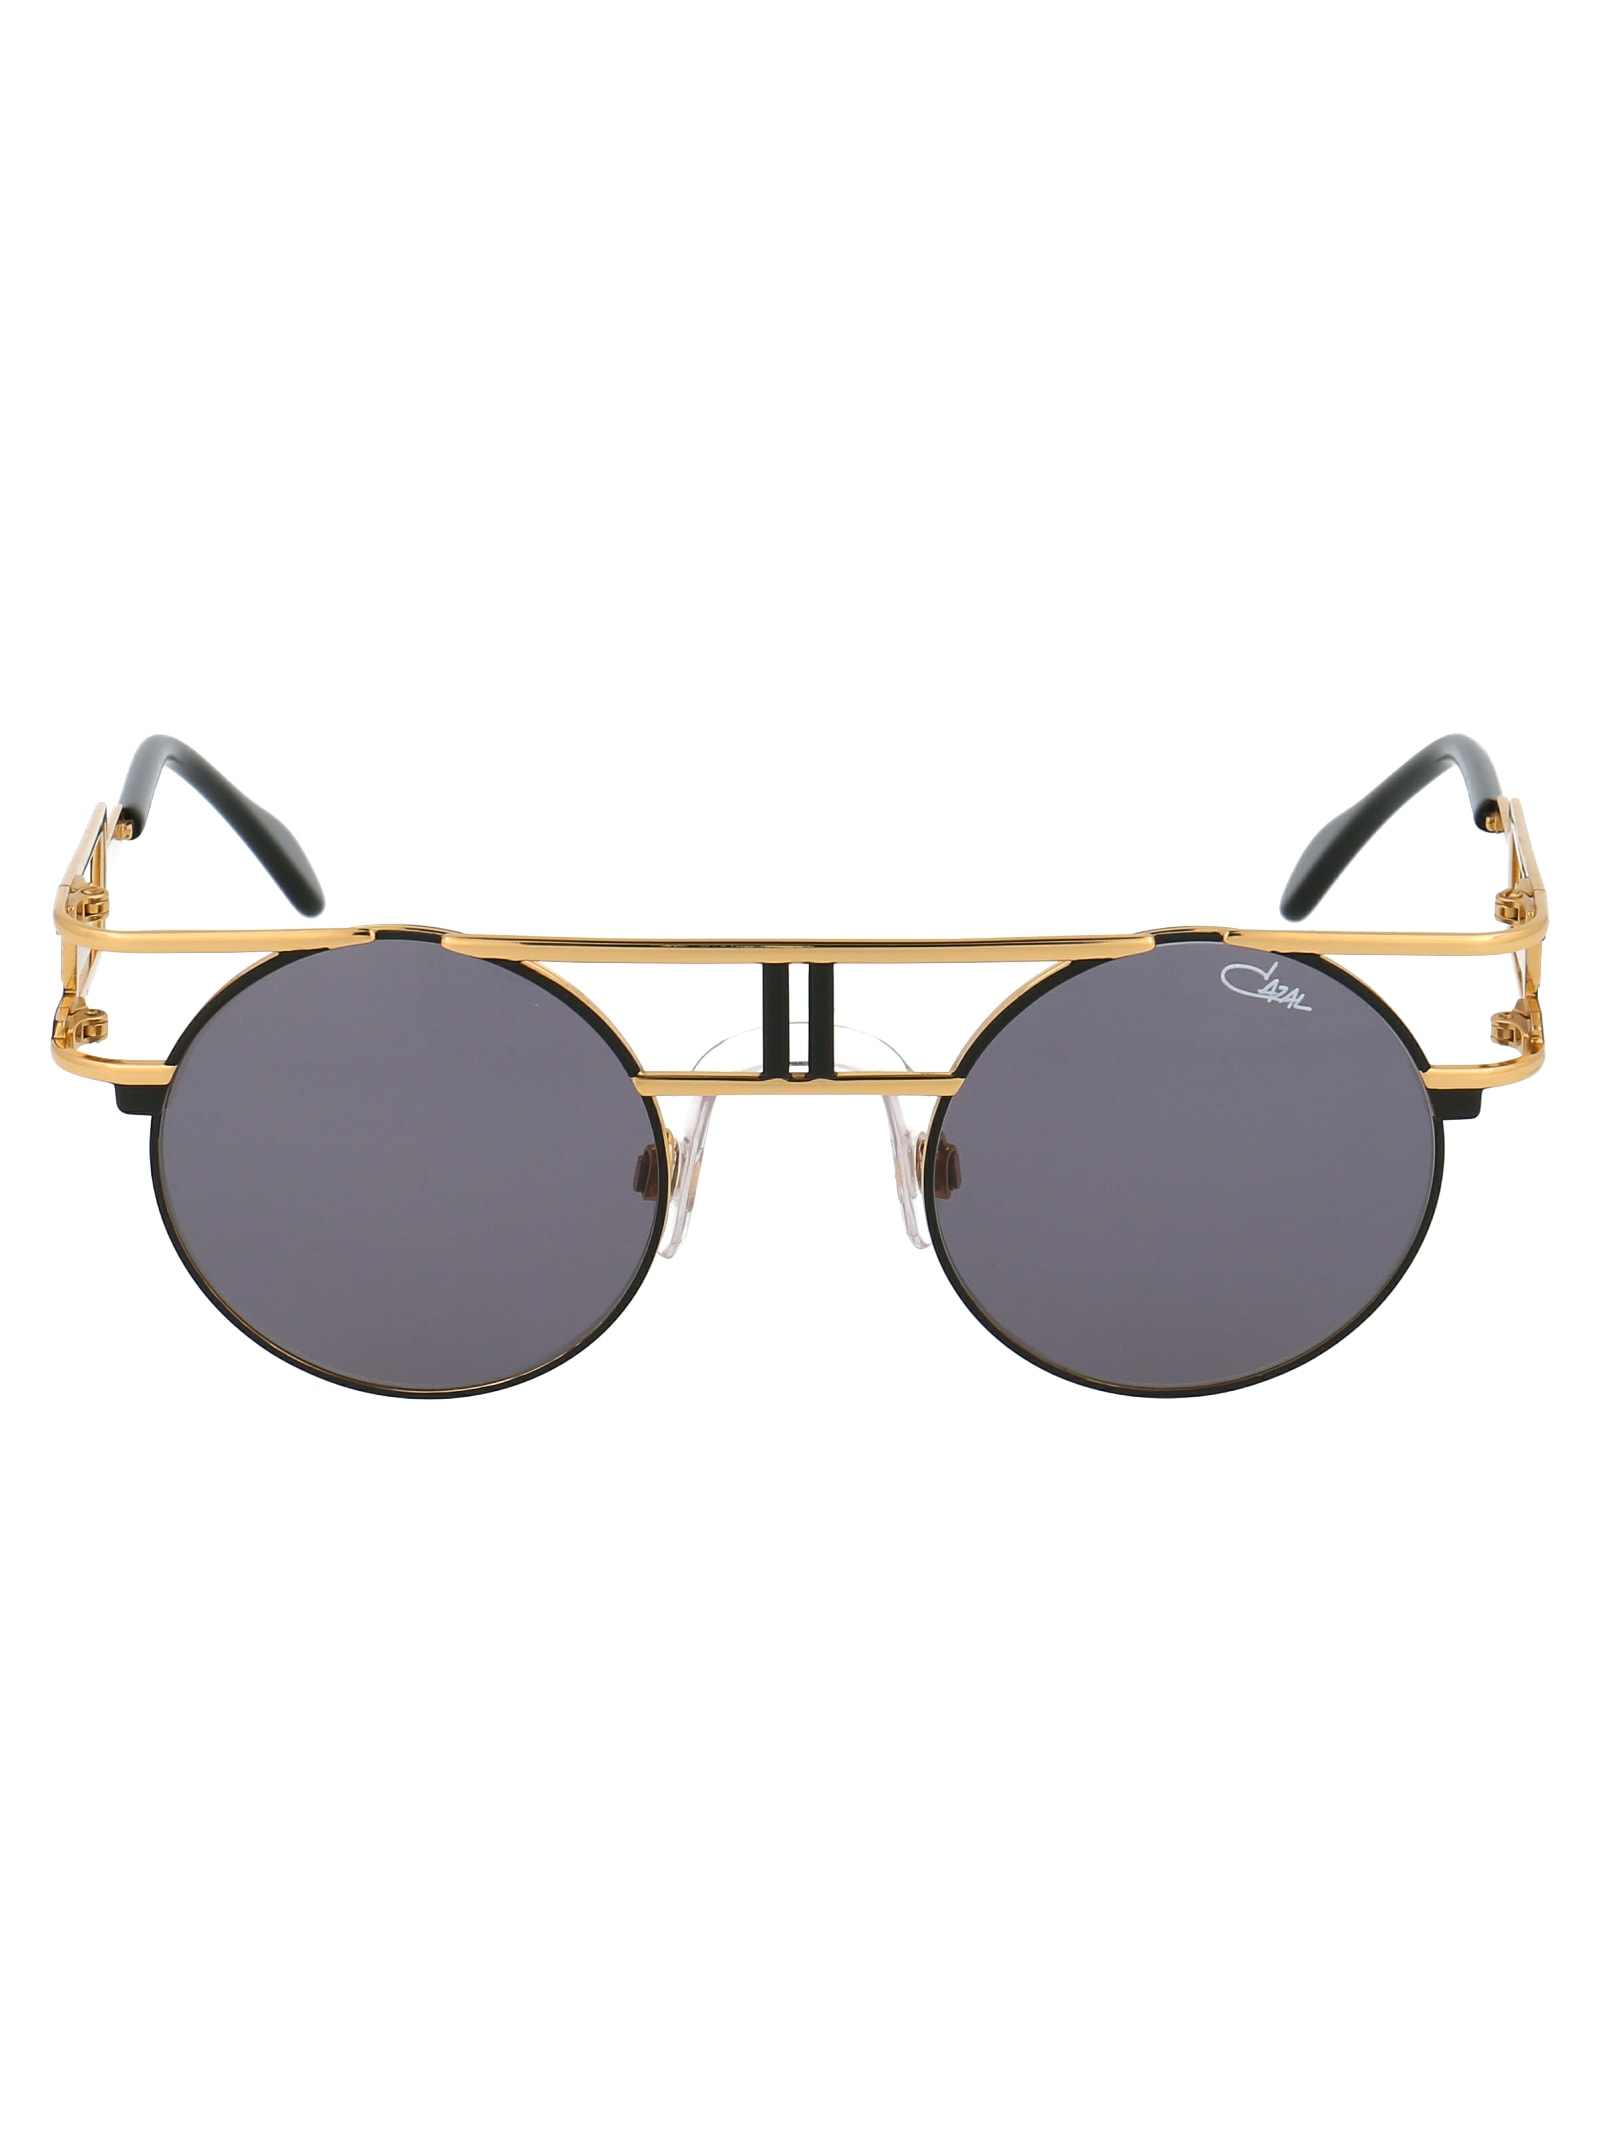 Cazal Mod. 958 Sunglasses